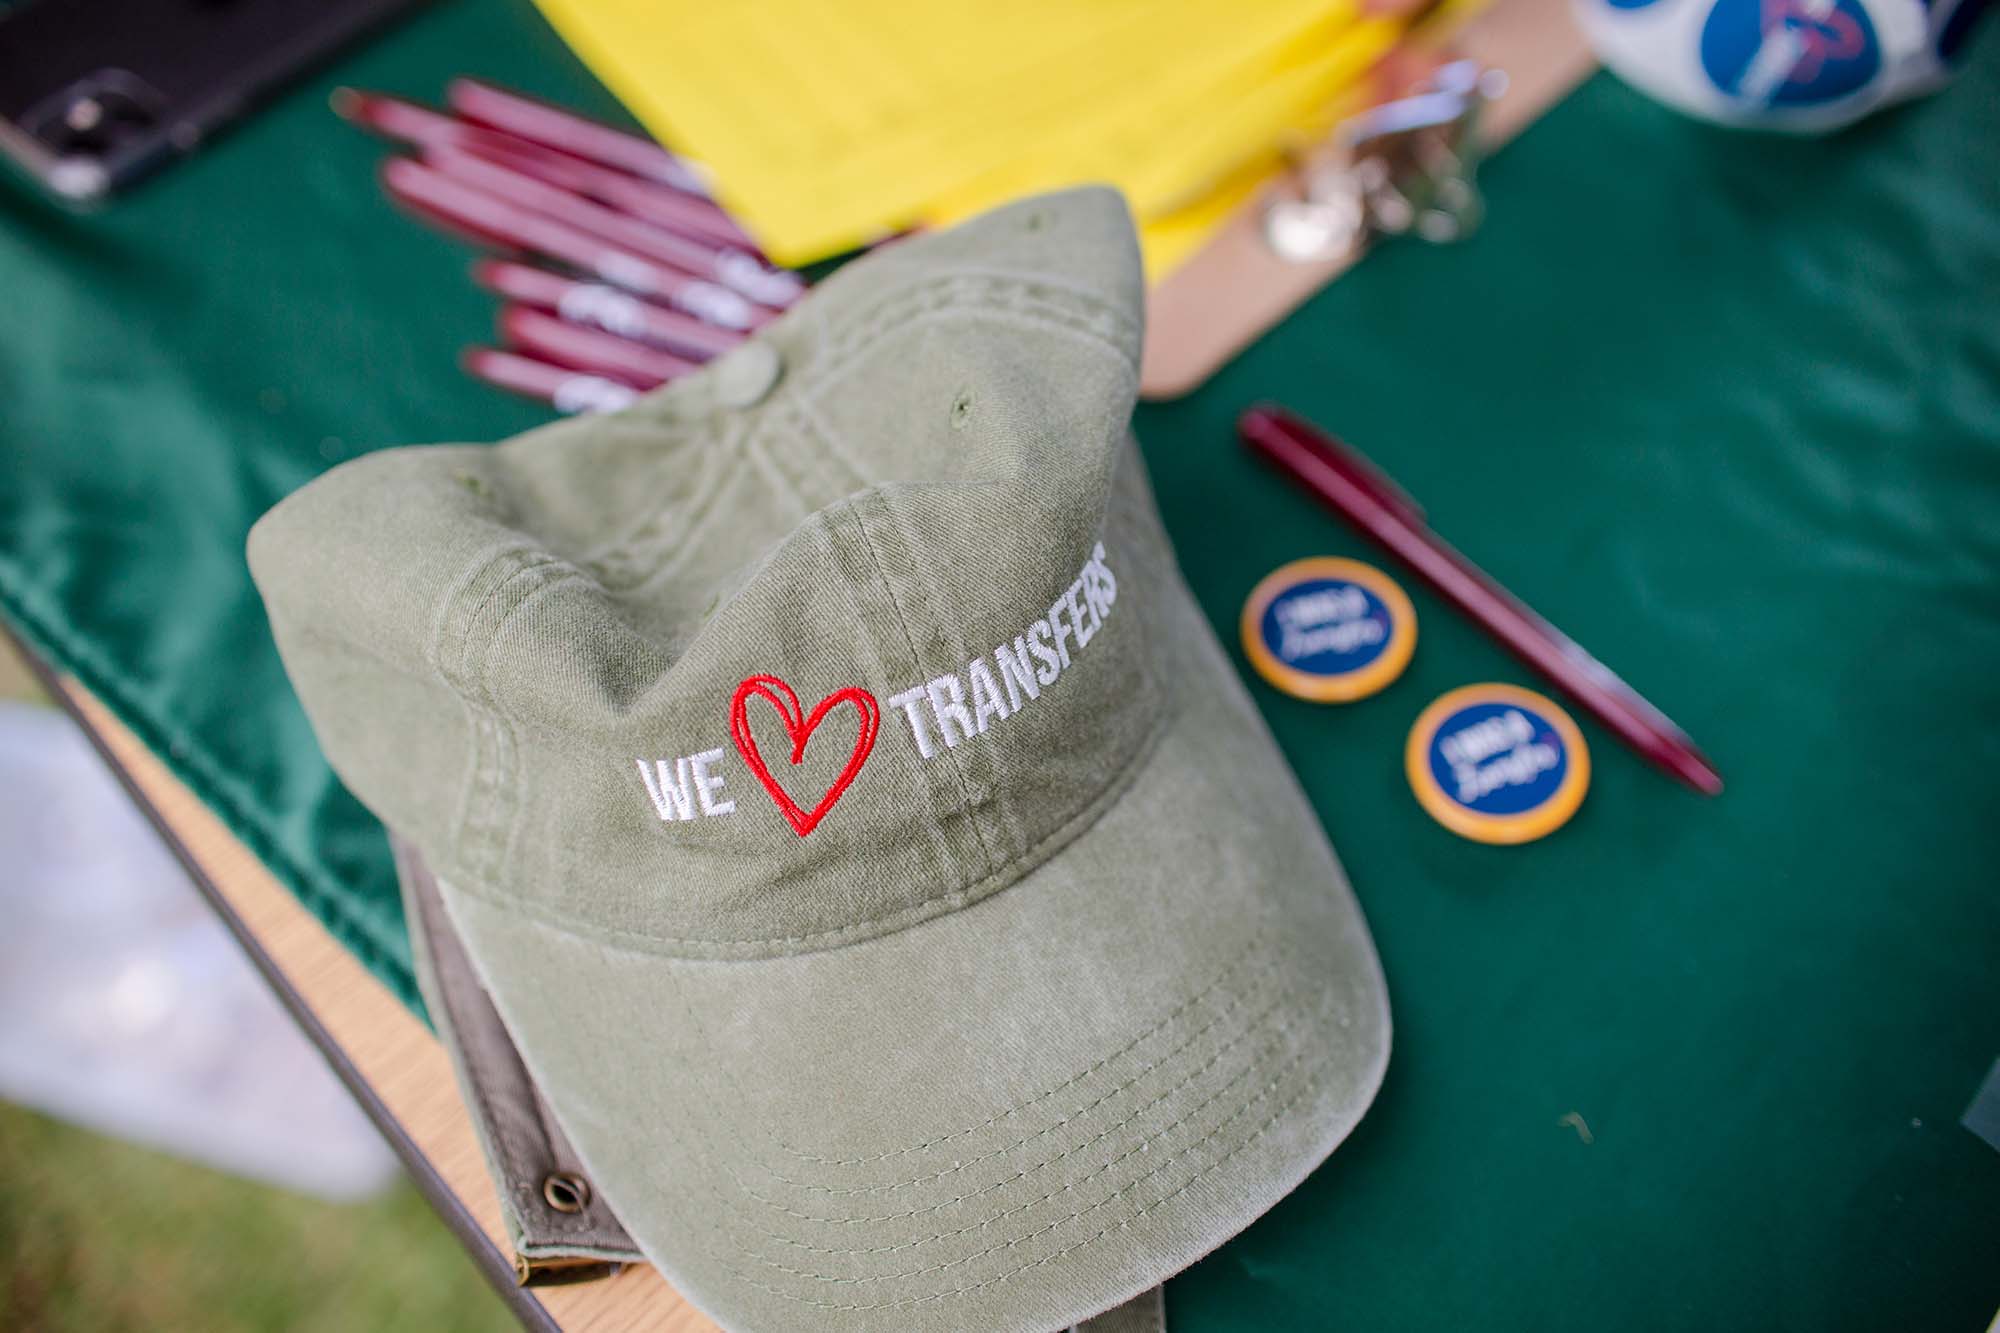 We heart transfer baseball hat on a merchandise table